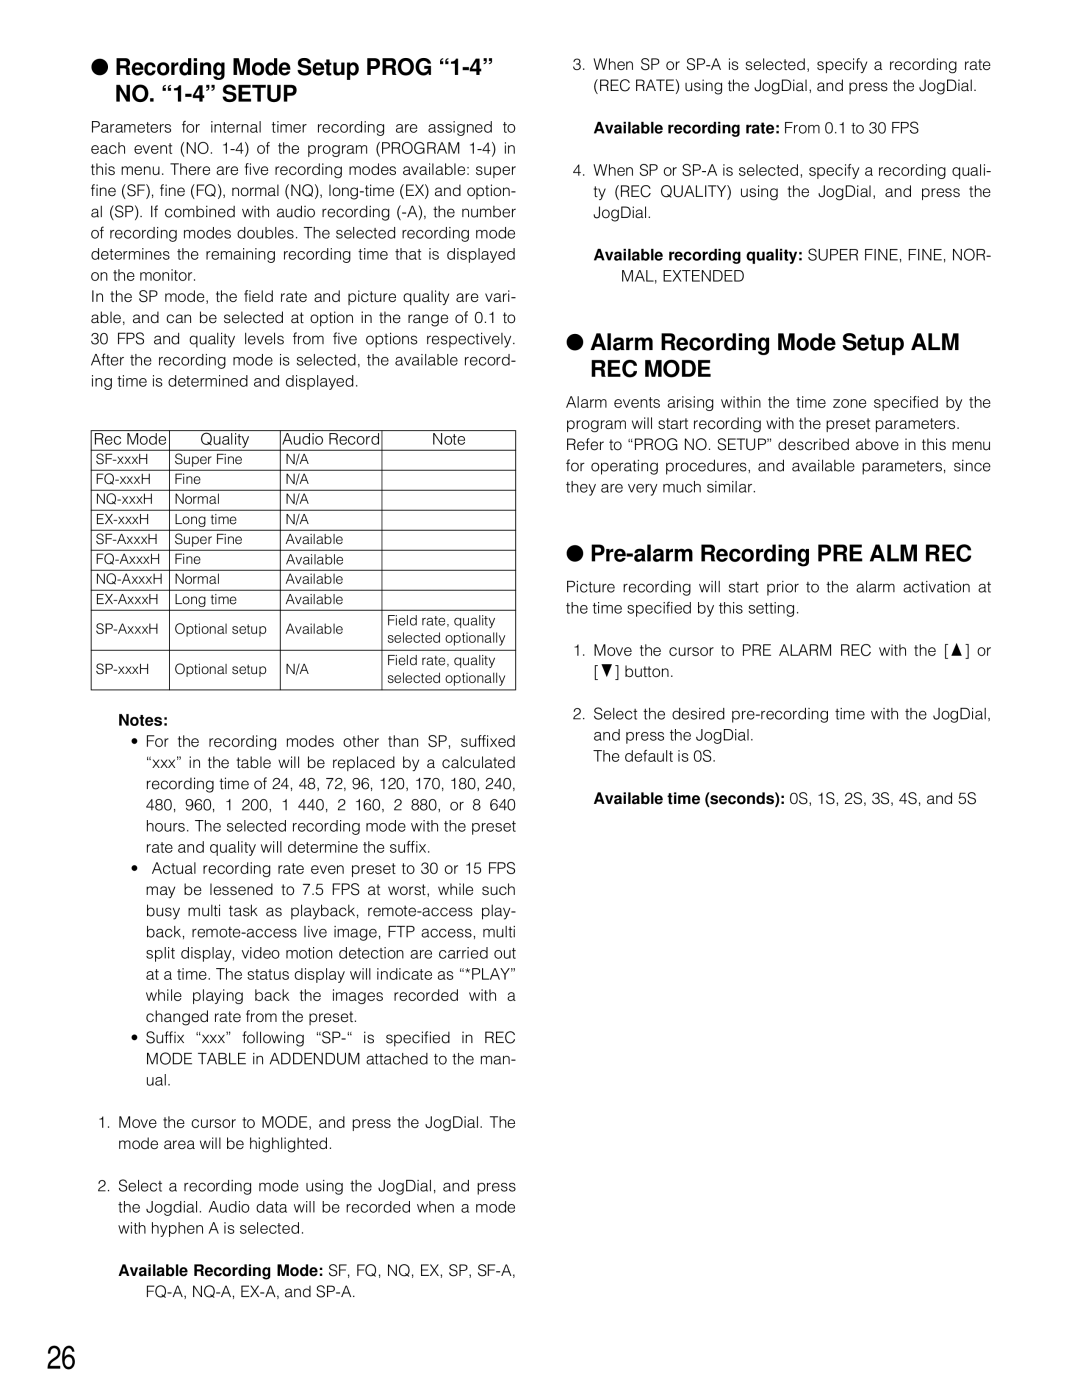 Panasonic WJ-HD200 manual Recording Mode Setup PROG “1-4”NO. “1-4”SETUP, Alarm Recording Mode Setup ALM REC MODE 